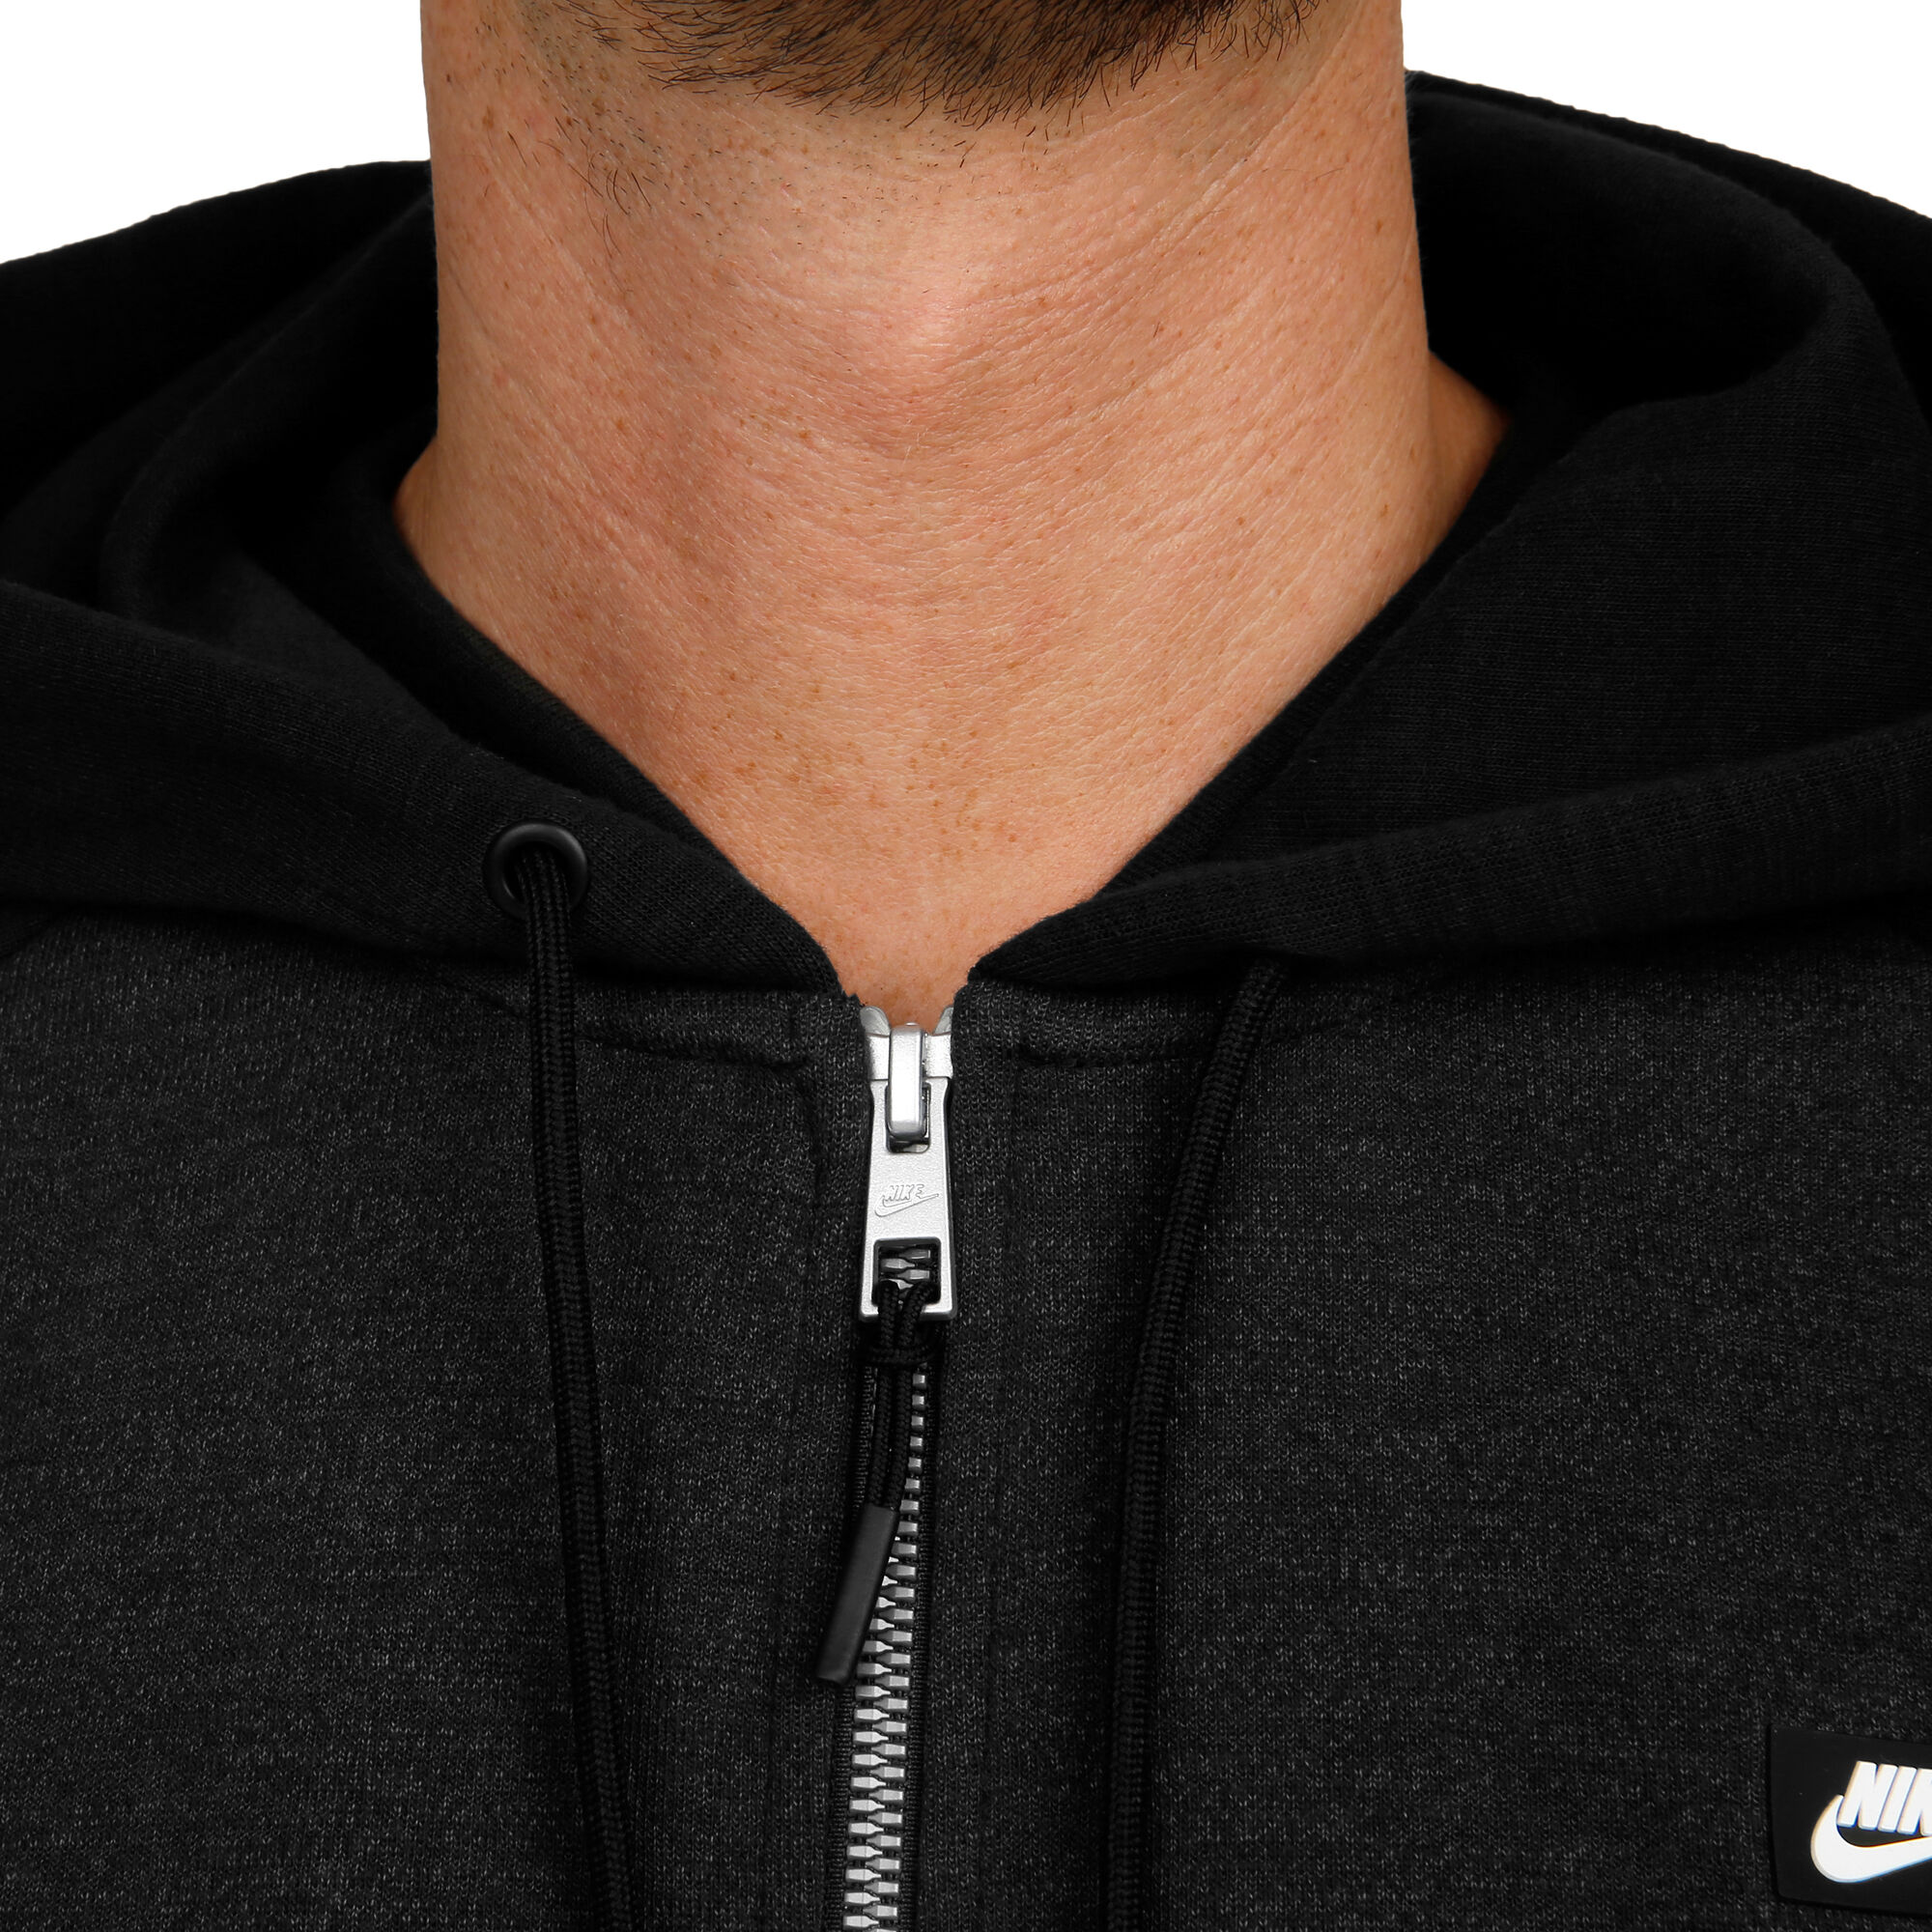 dat is alles Heel boos Uiterlijk buy Nike Sportswear Optic Fleece Training Jacket Men - Black, White online  | Tennis-Point